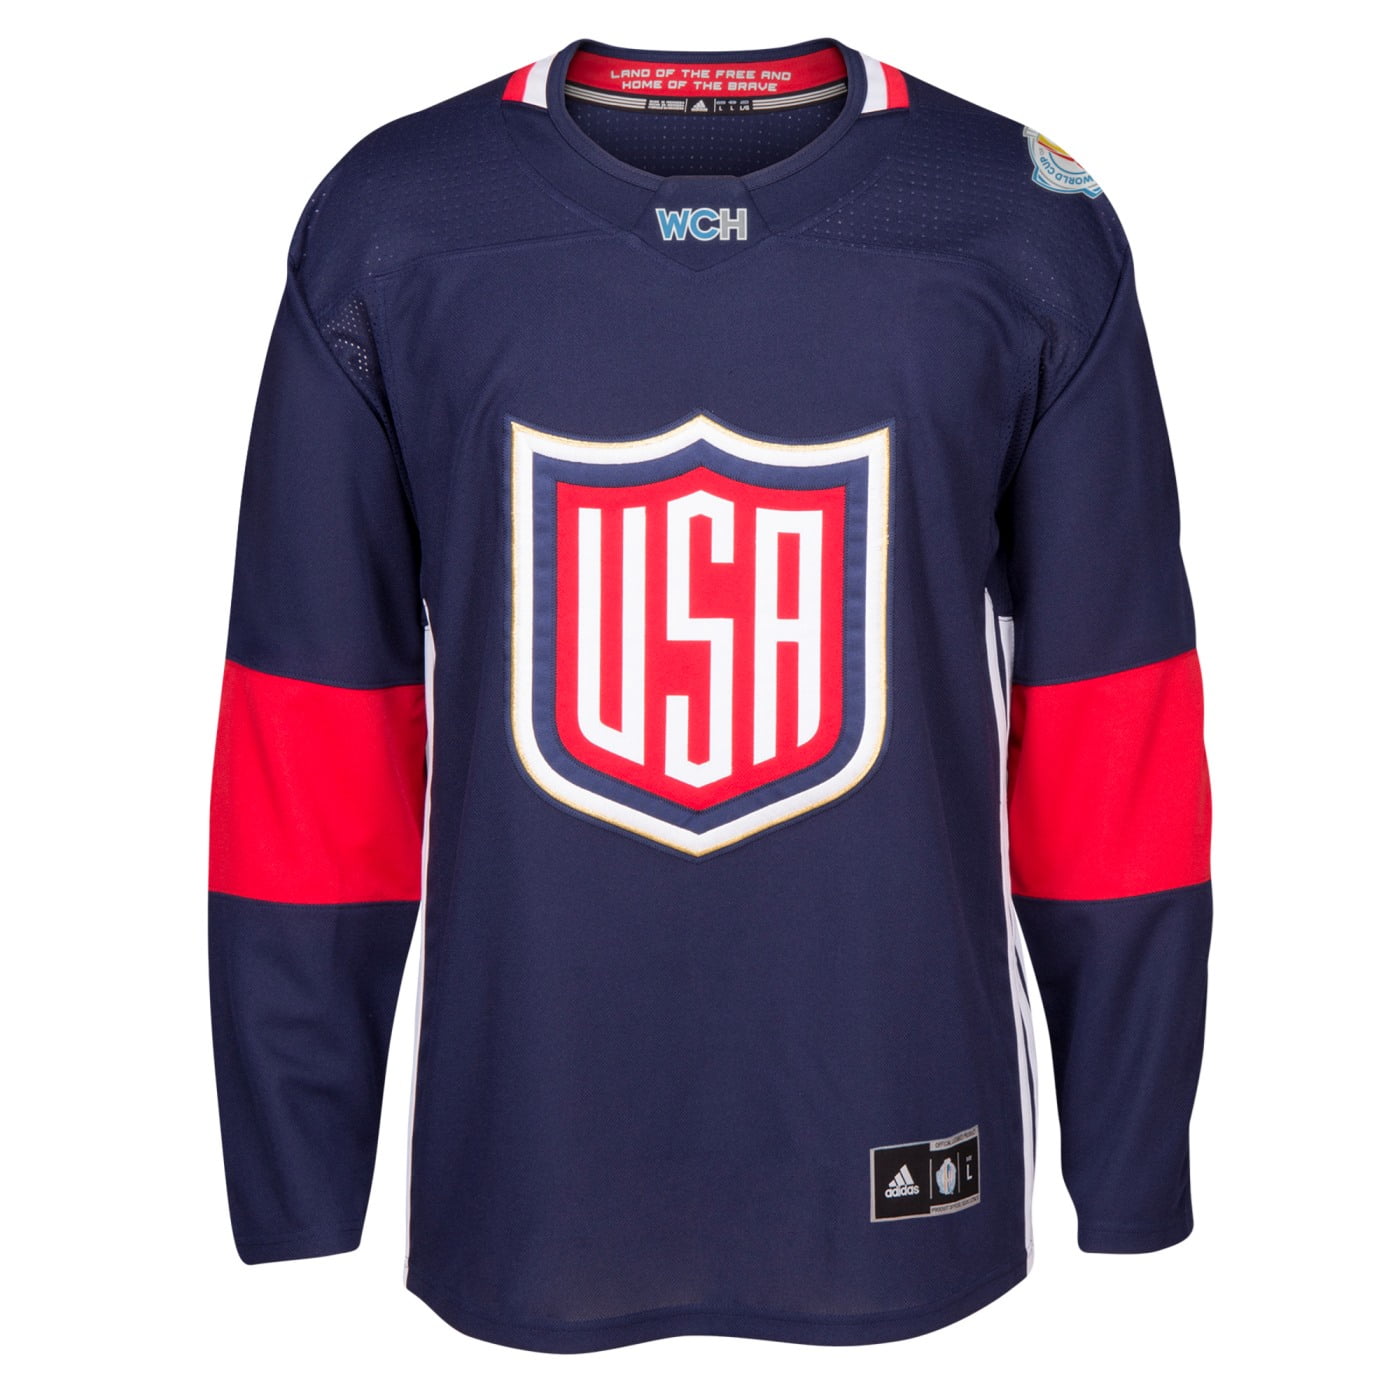 Adidas - Team USA 2016 World Cup of 